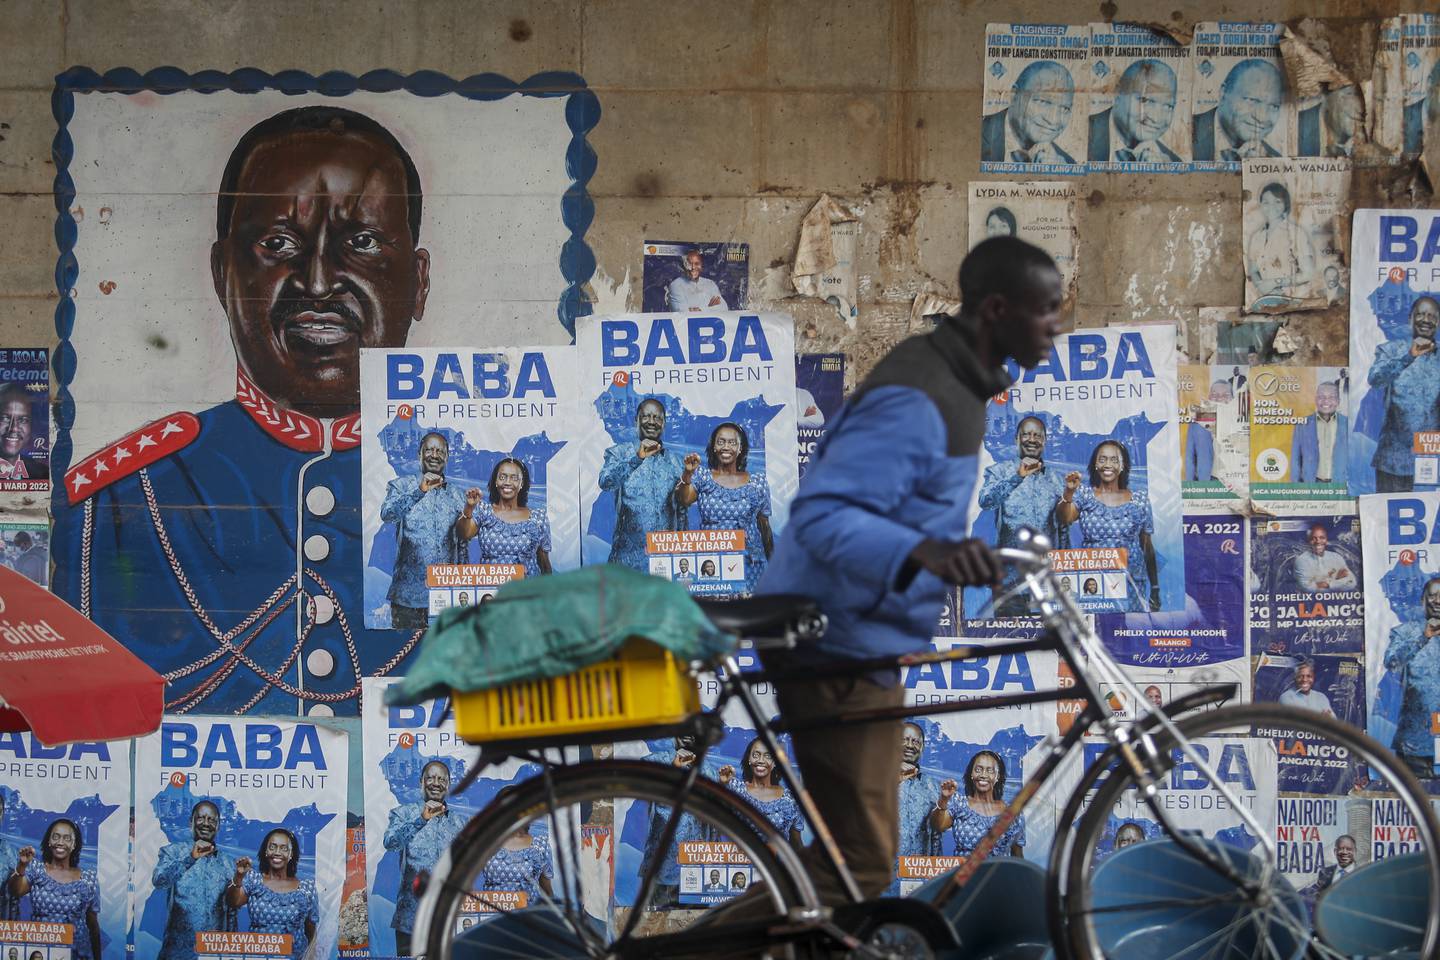 «BABA»: Kampanjeplakater for presidentkandidat Raila Odinga, som blir kalt «Baba» – swahili for «pappa», og hans visepresidentkandidat Martha Karua.